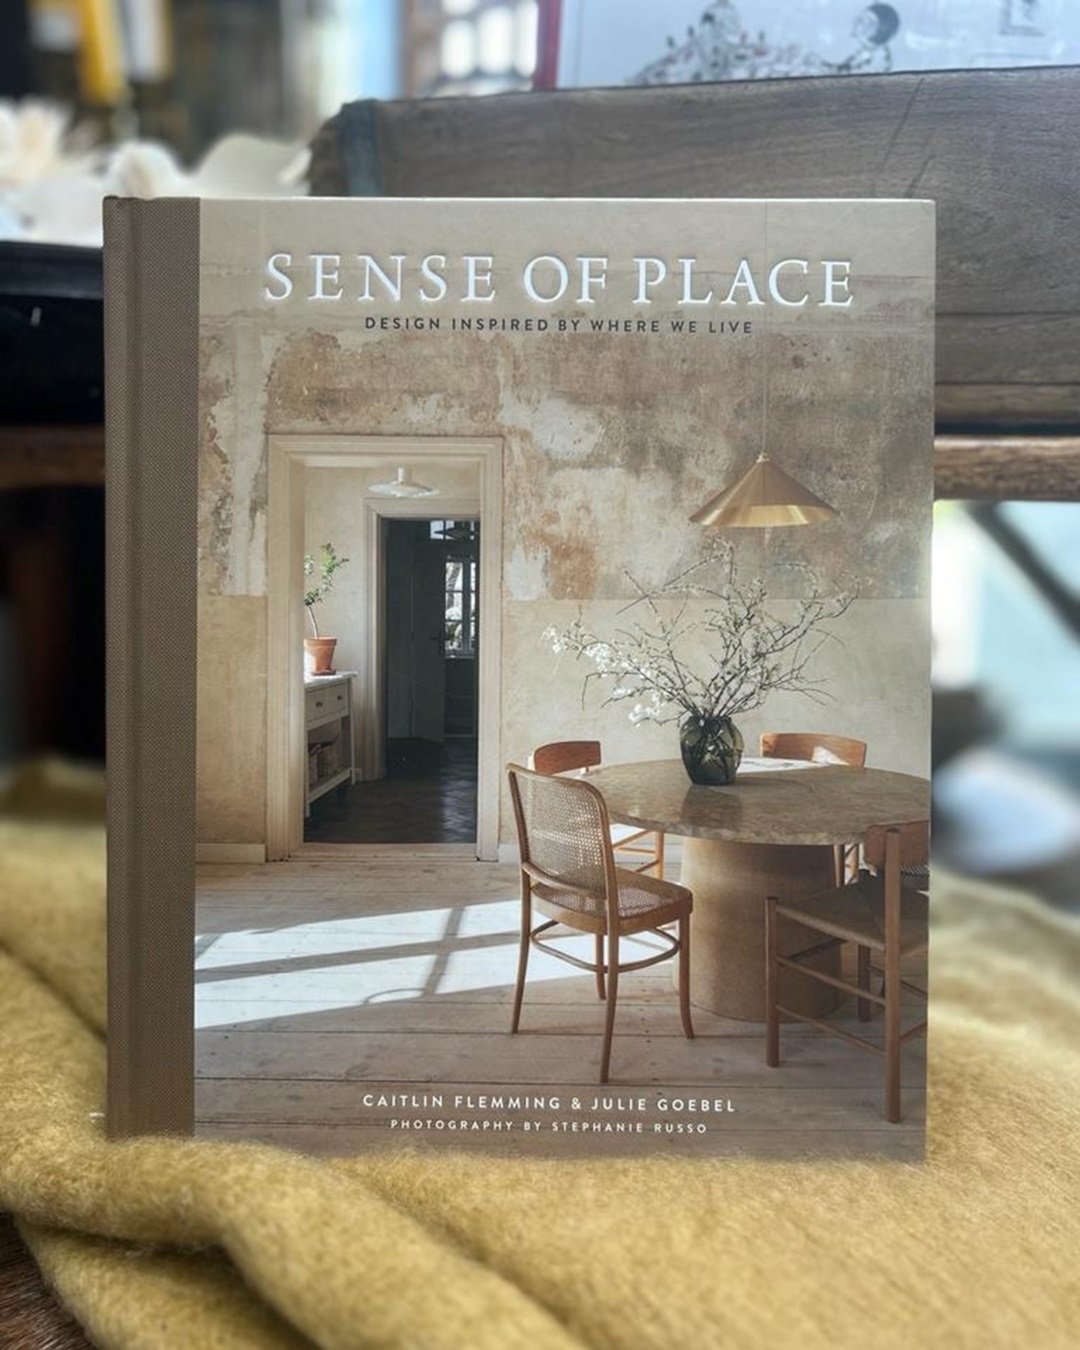 Sense of place hardcover design book on blanket